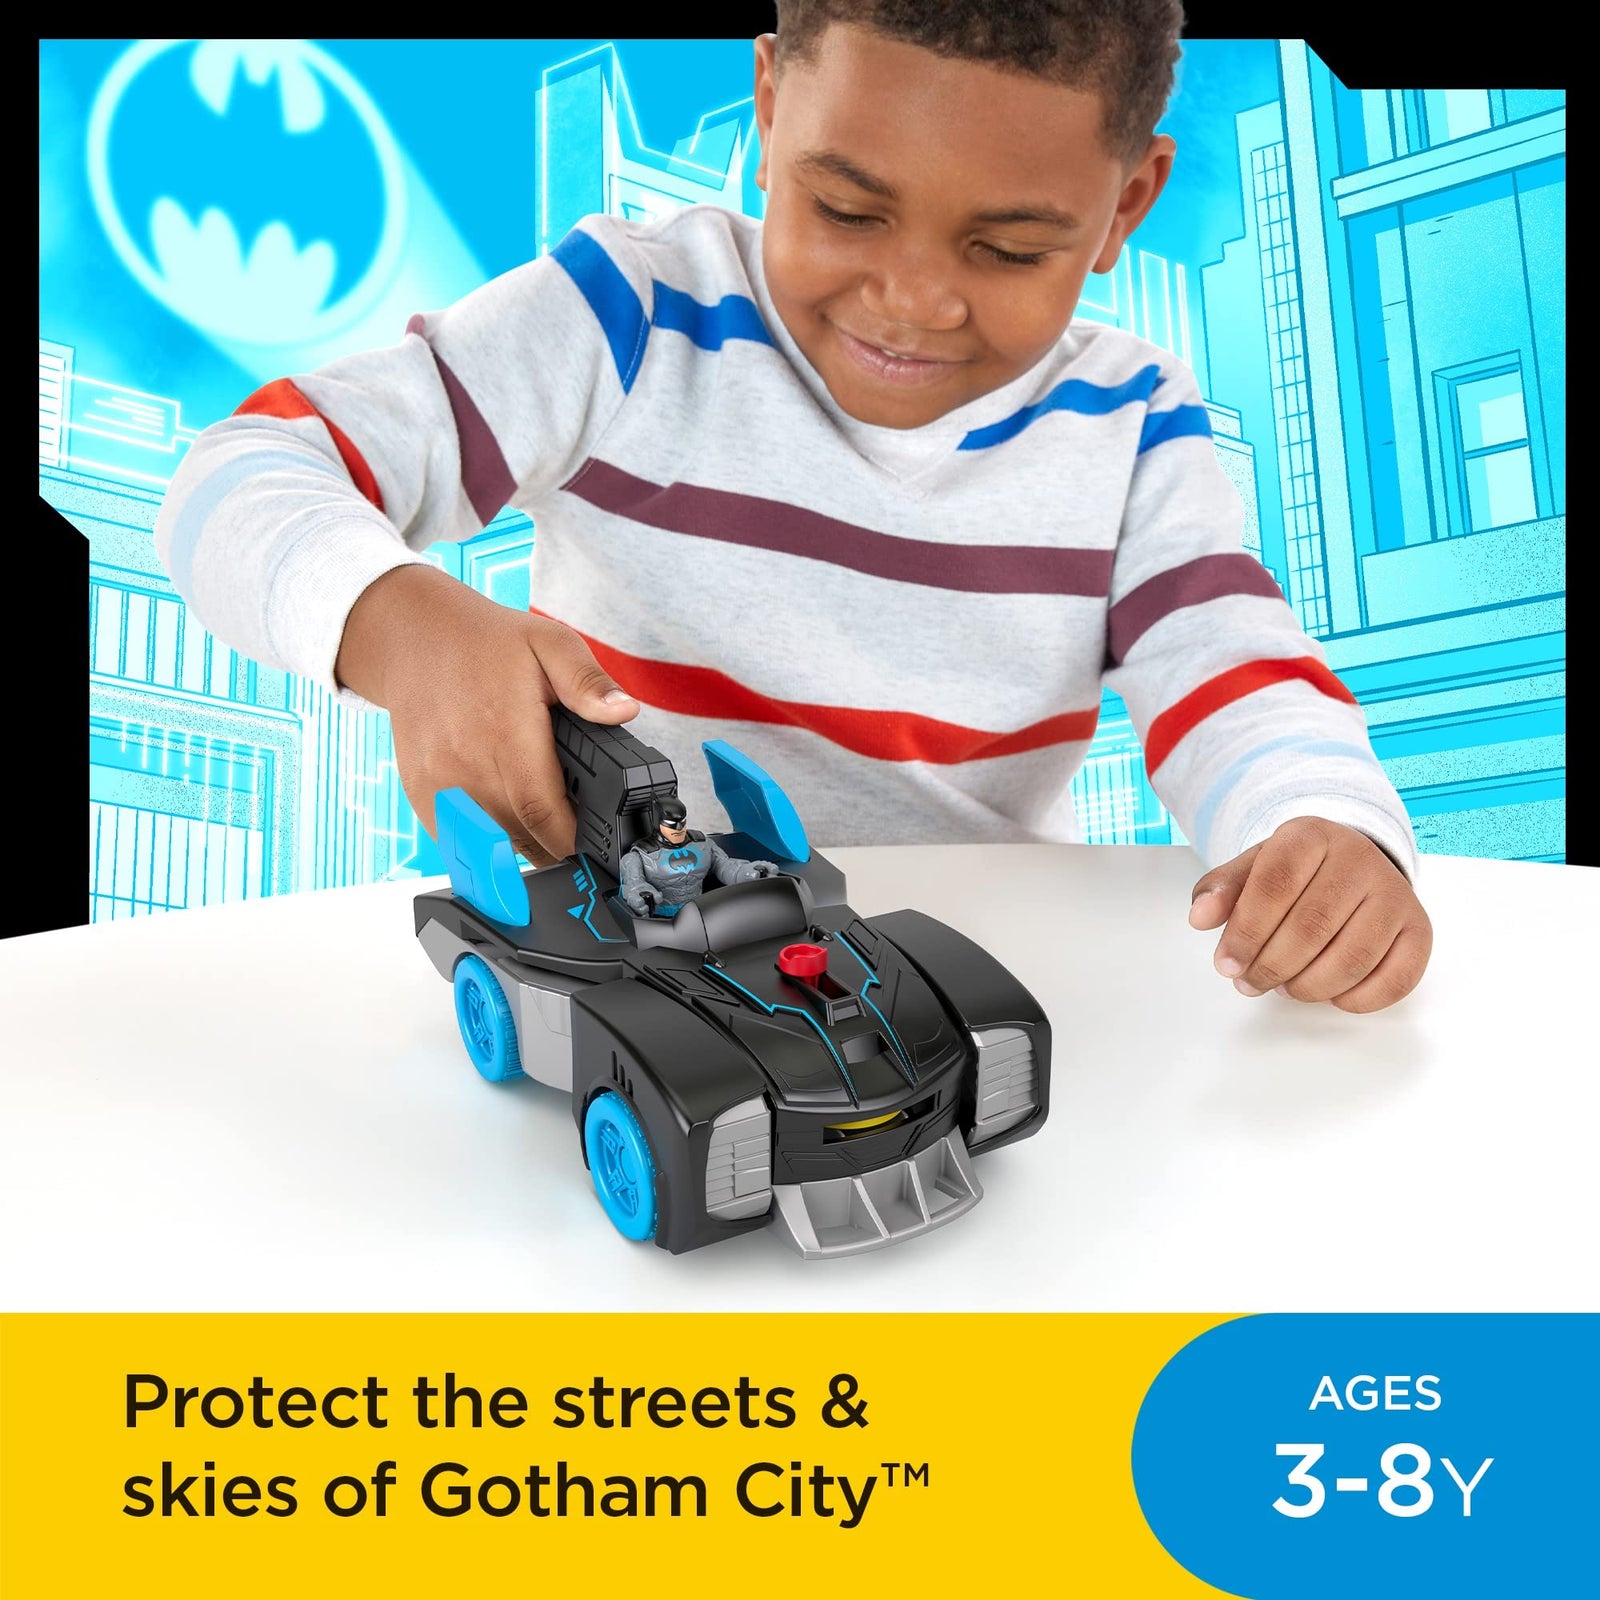 Fisher-Price Imaginext DC Super Friends Bat-Tech Batmobile, transforming push-along vehicle with light-up Batman figure for preschool kids ages 3-8